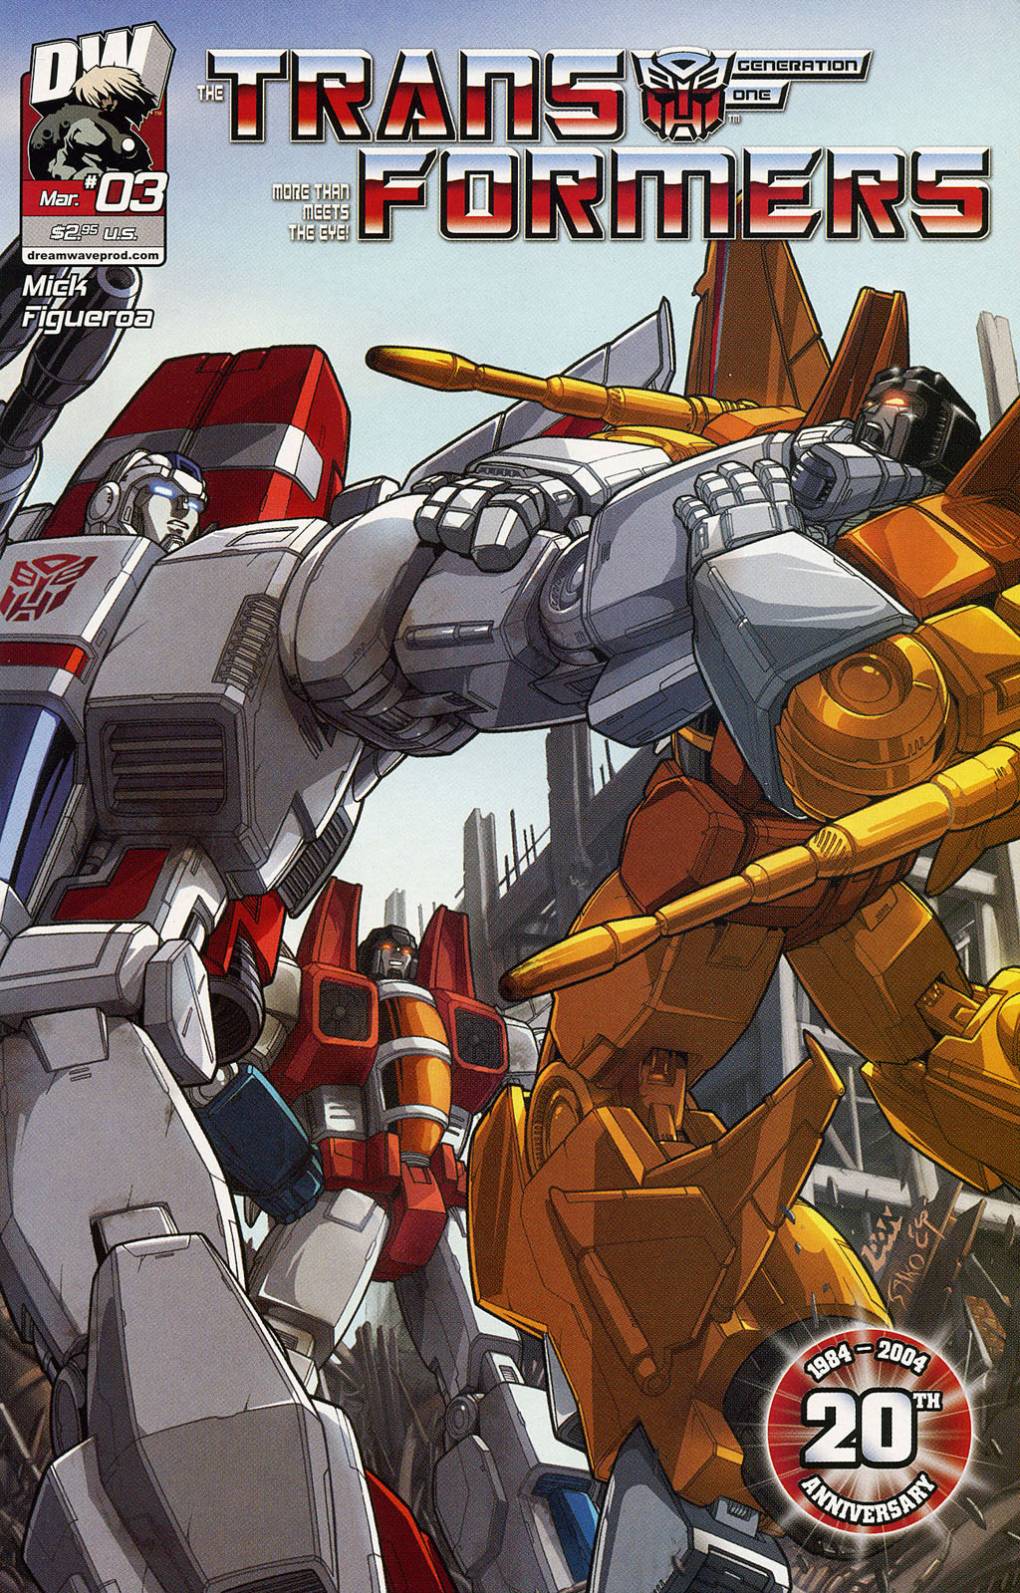 DreamWave's Transformers GENERATION 1 #3